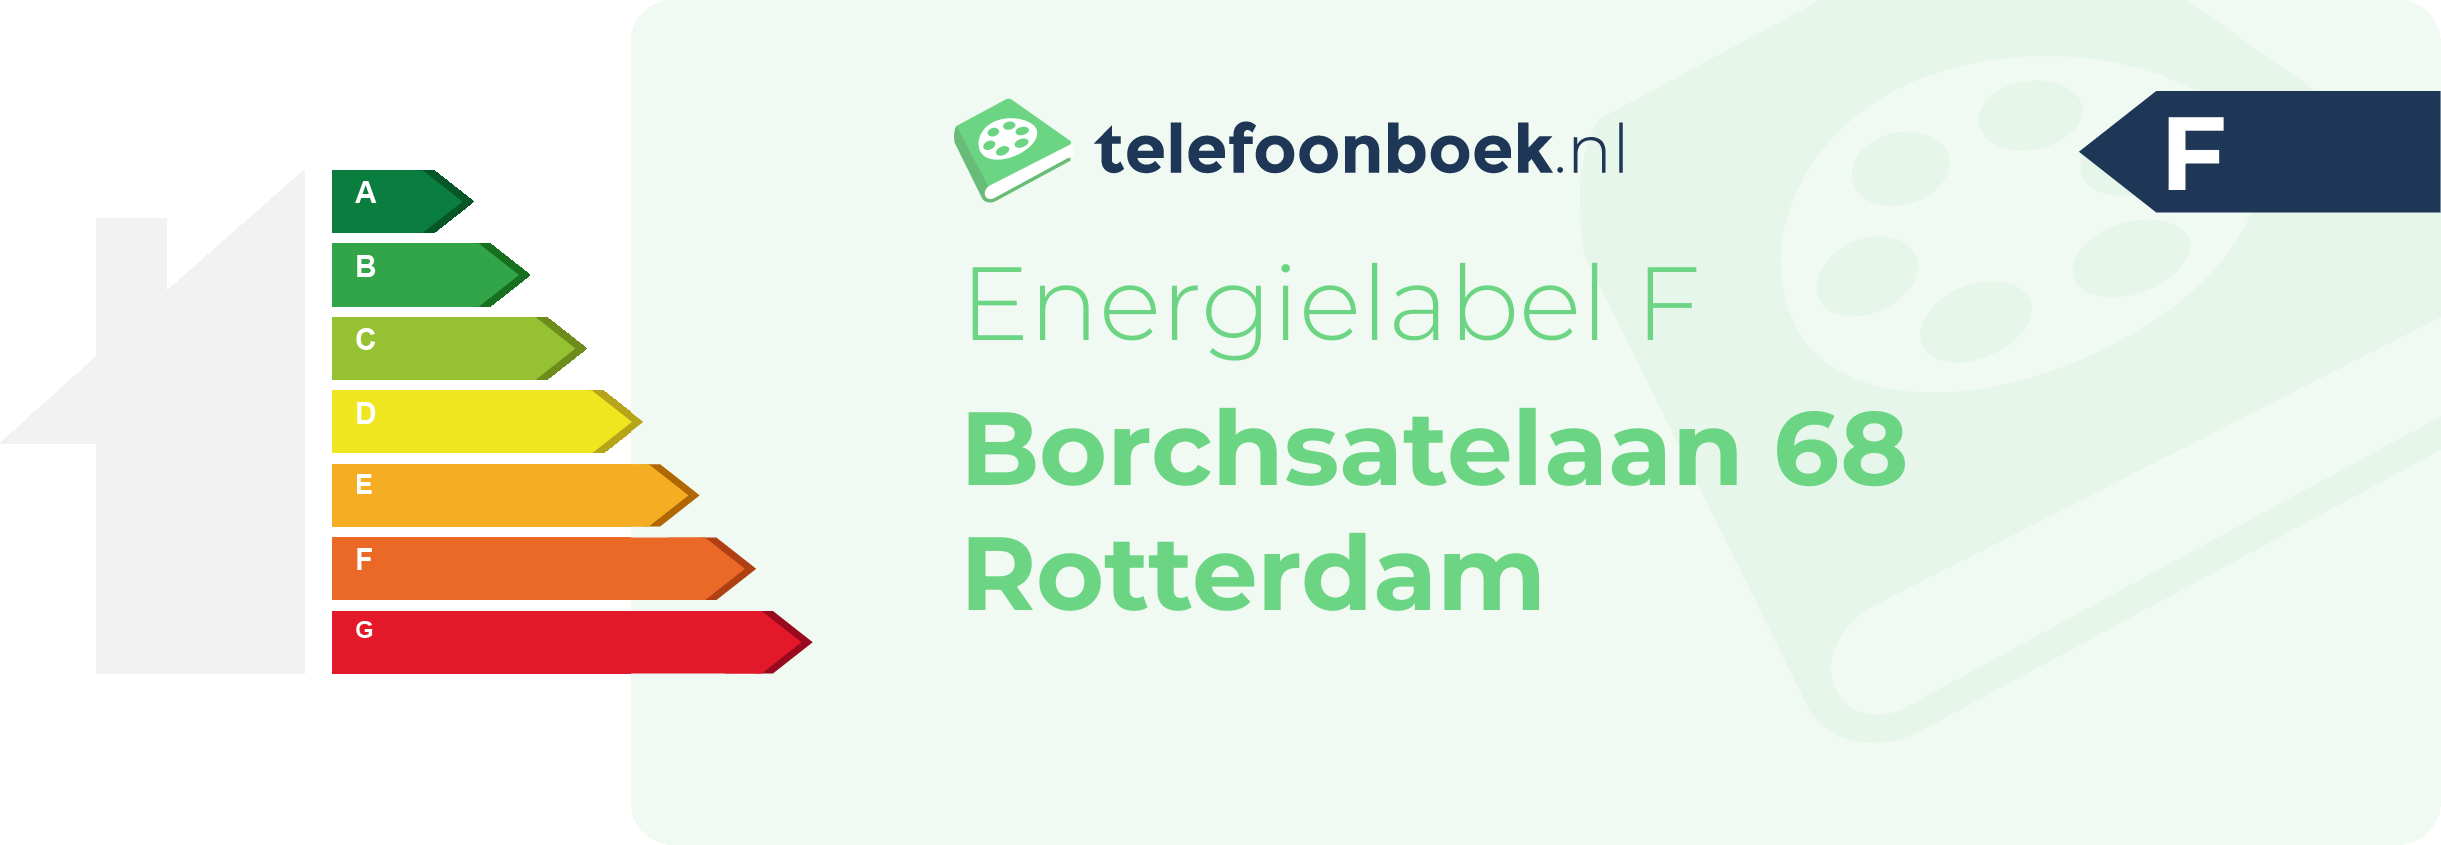 Energielabel Borchsatelaan 68 Rotterdam